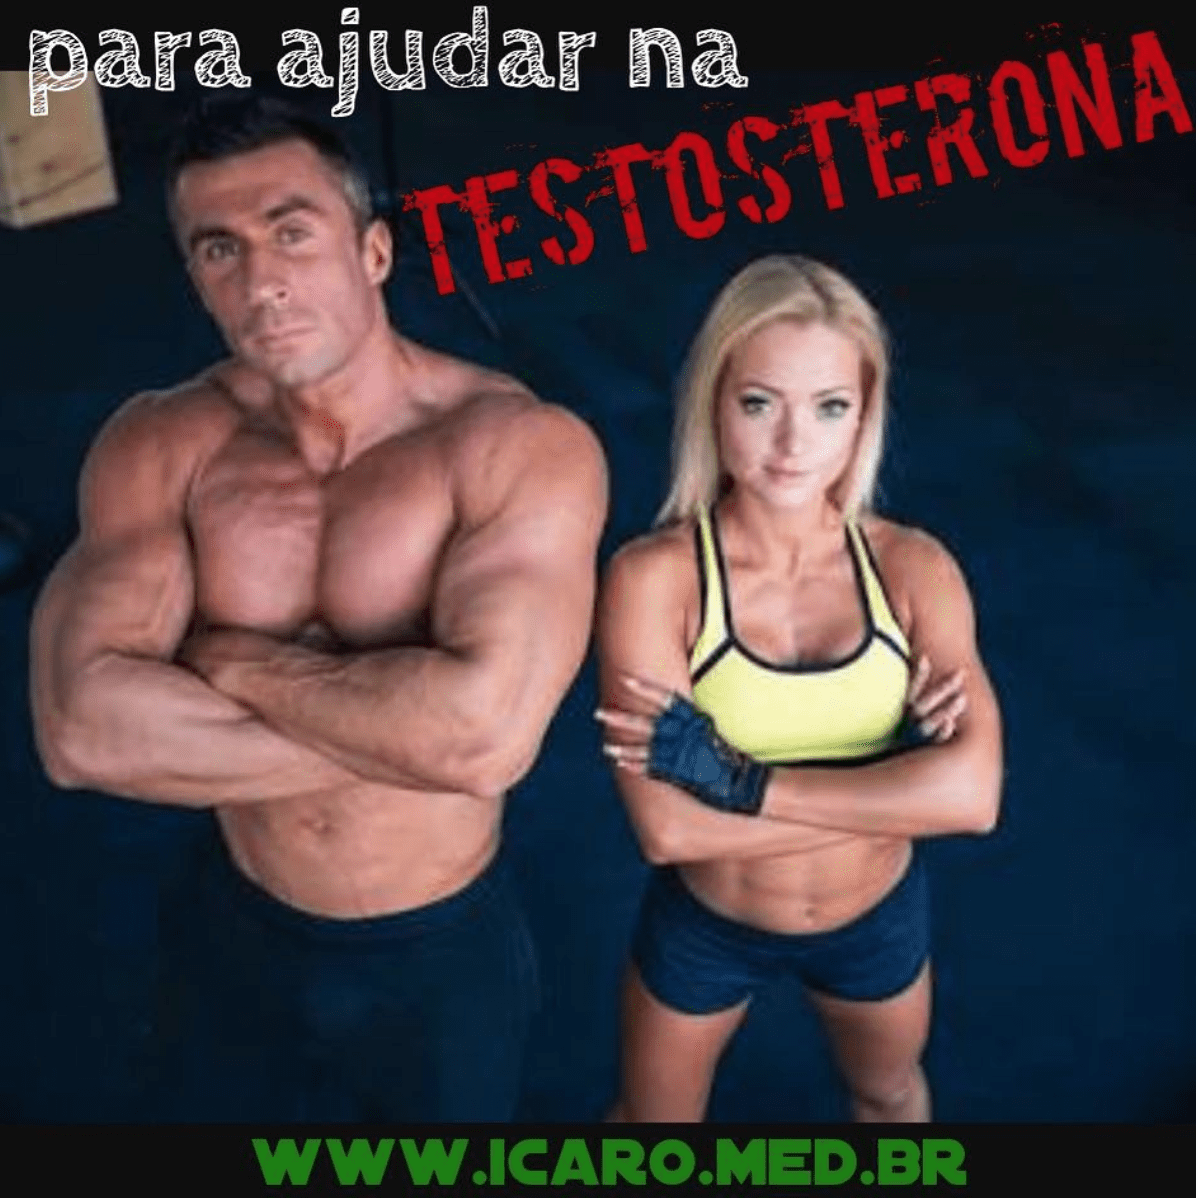 Testosterona www.icaro .med .br